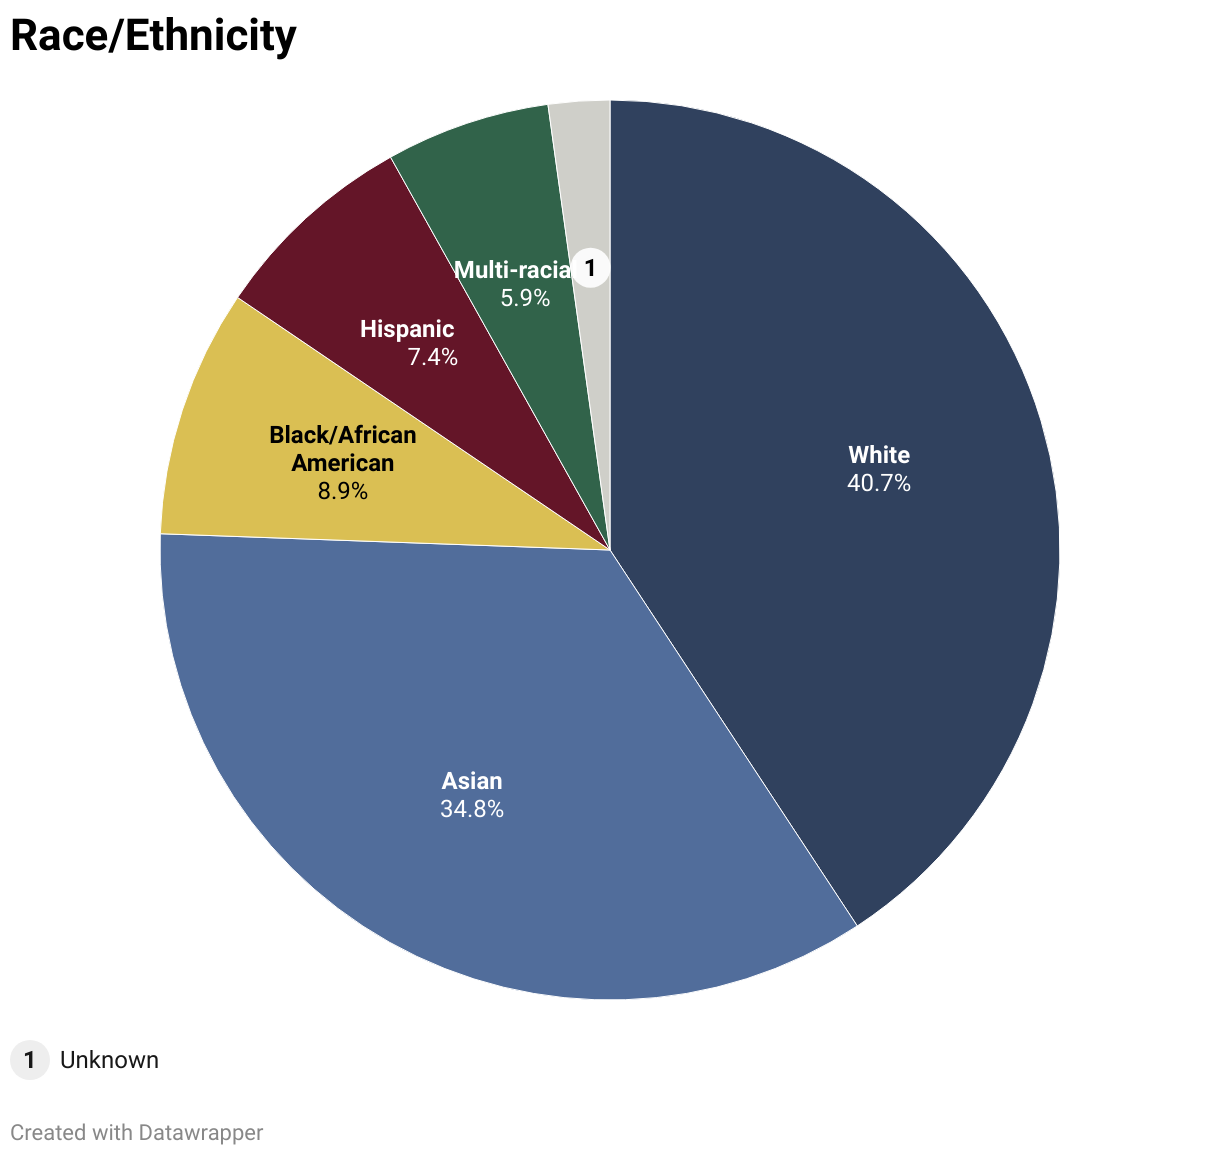 White: 40.7%Asian: 34.8%Hispanic: 7.4%Black/African American: 8.9%;Multi-racial: 5.9%Unknown: 2.2%